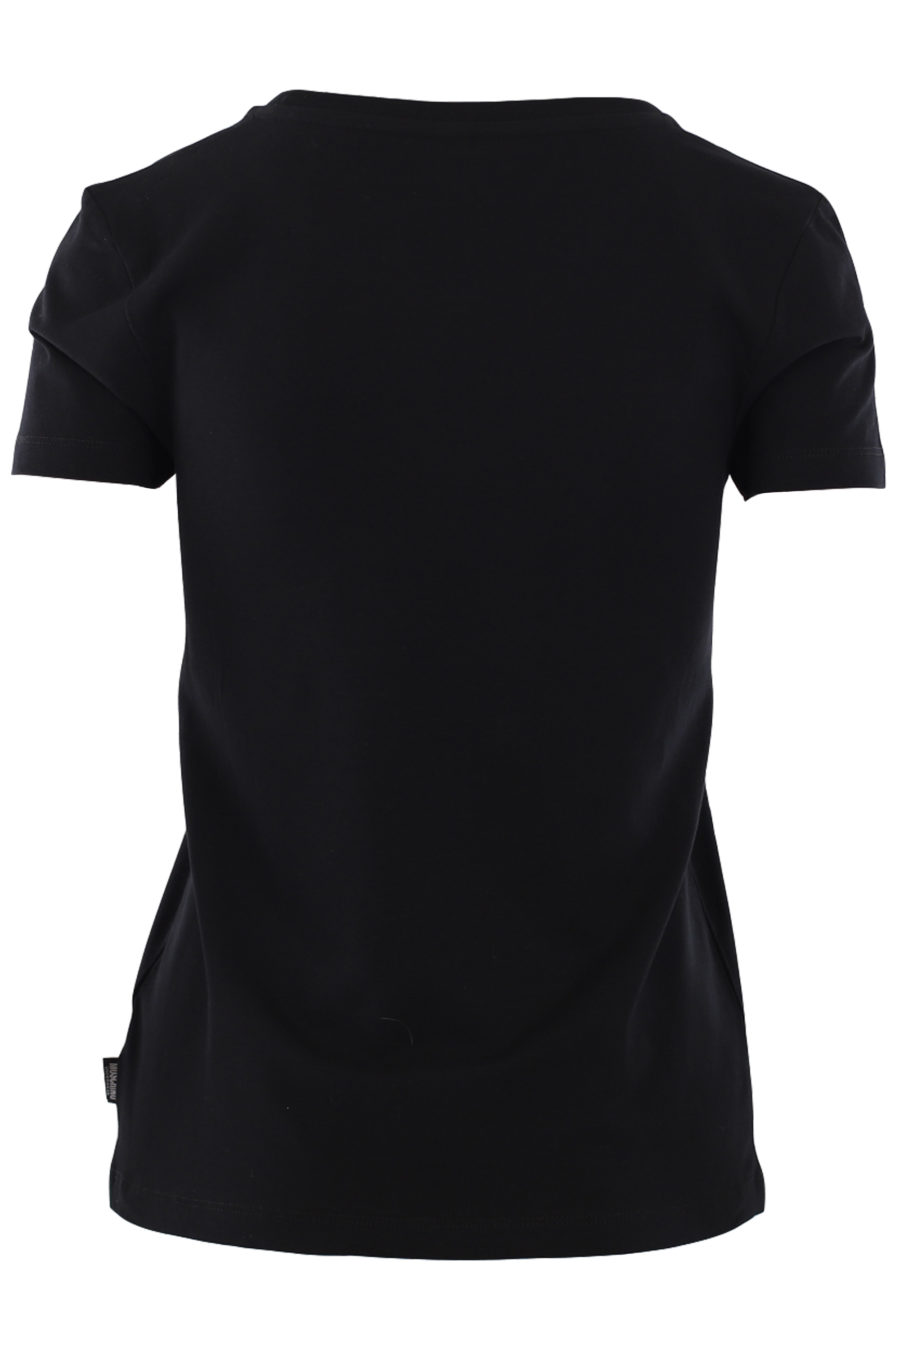 Camiseta negra con logo oso "underbear" - IMG 0831